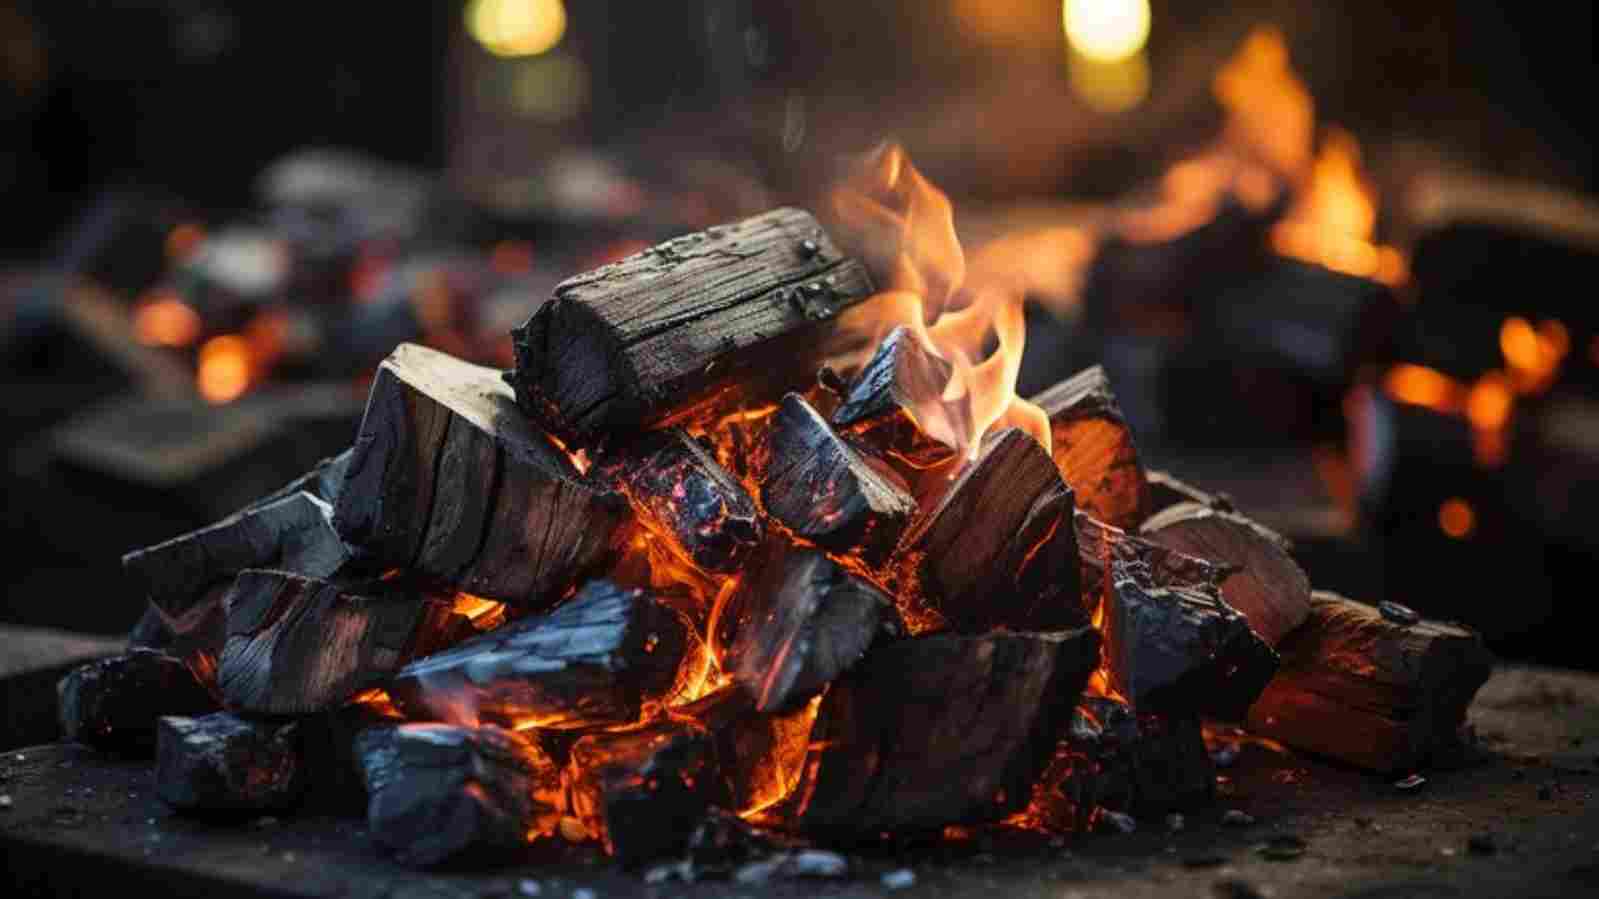 Spiritual Meaning of Smelling Burning Wood